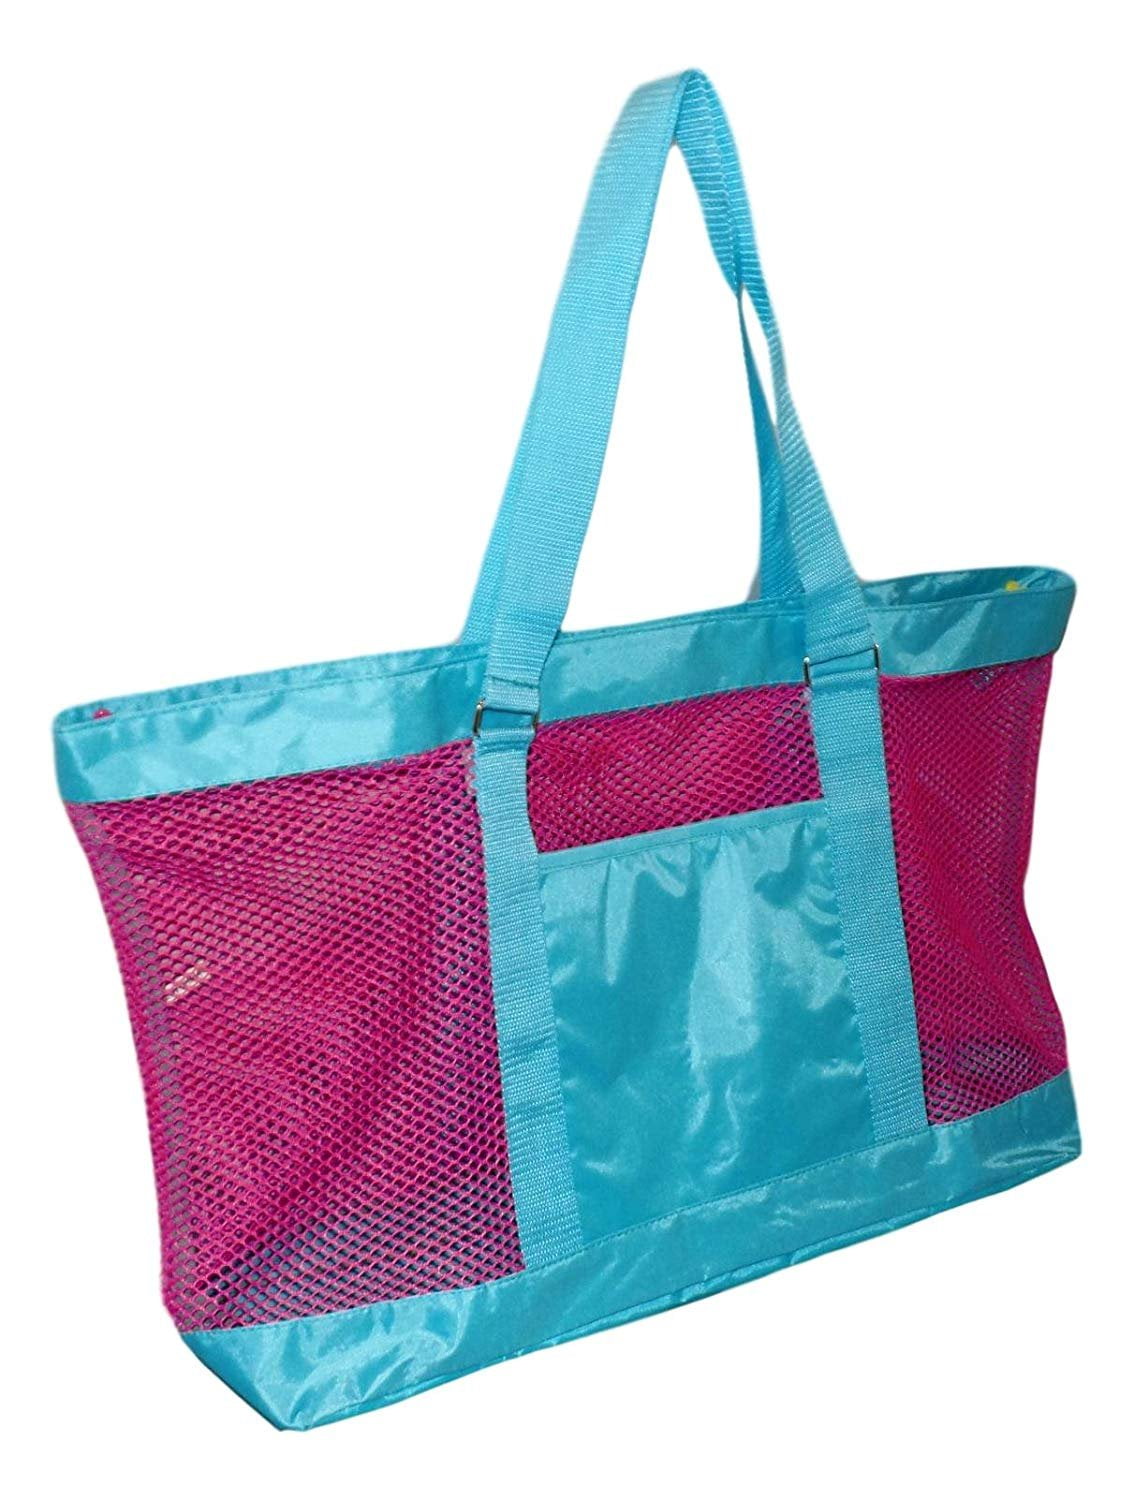 LIVACASA Mesh Beach Bags Large Totes for Women for Beach